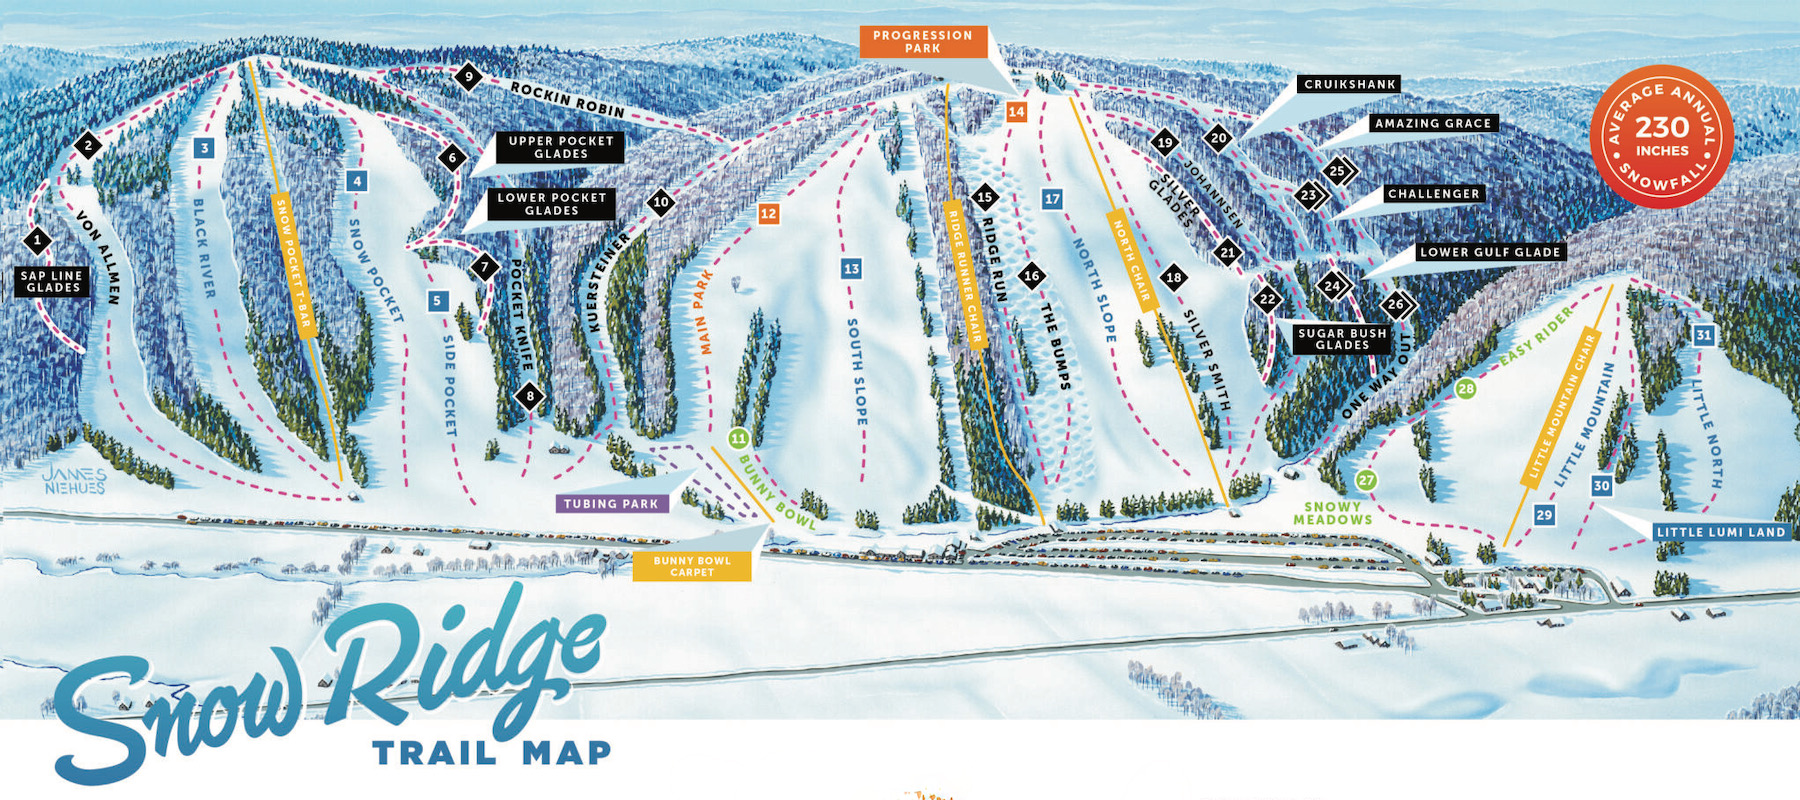 Snow Ridge trail map